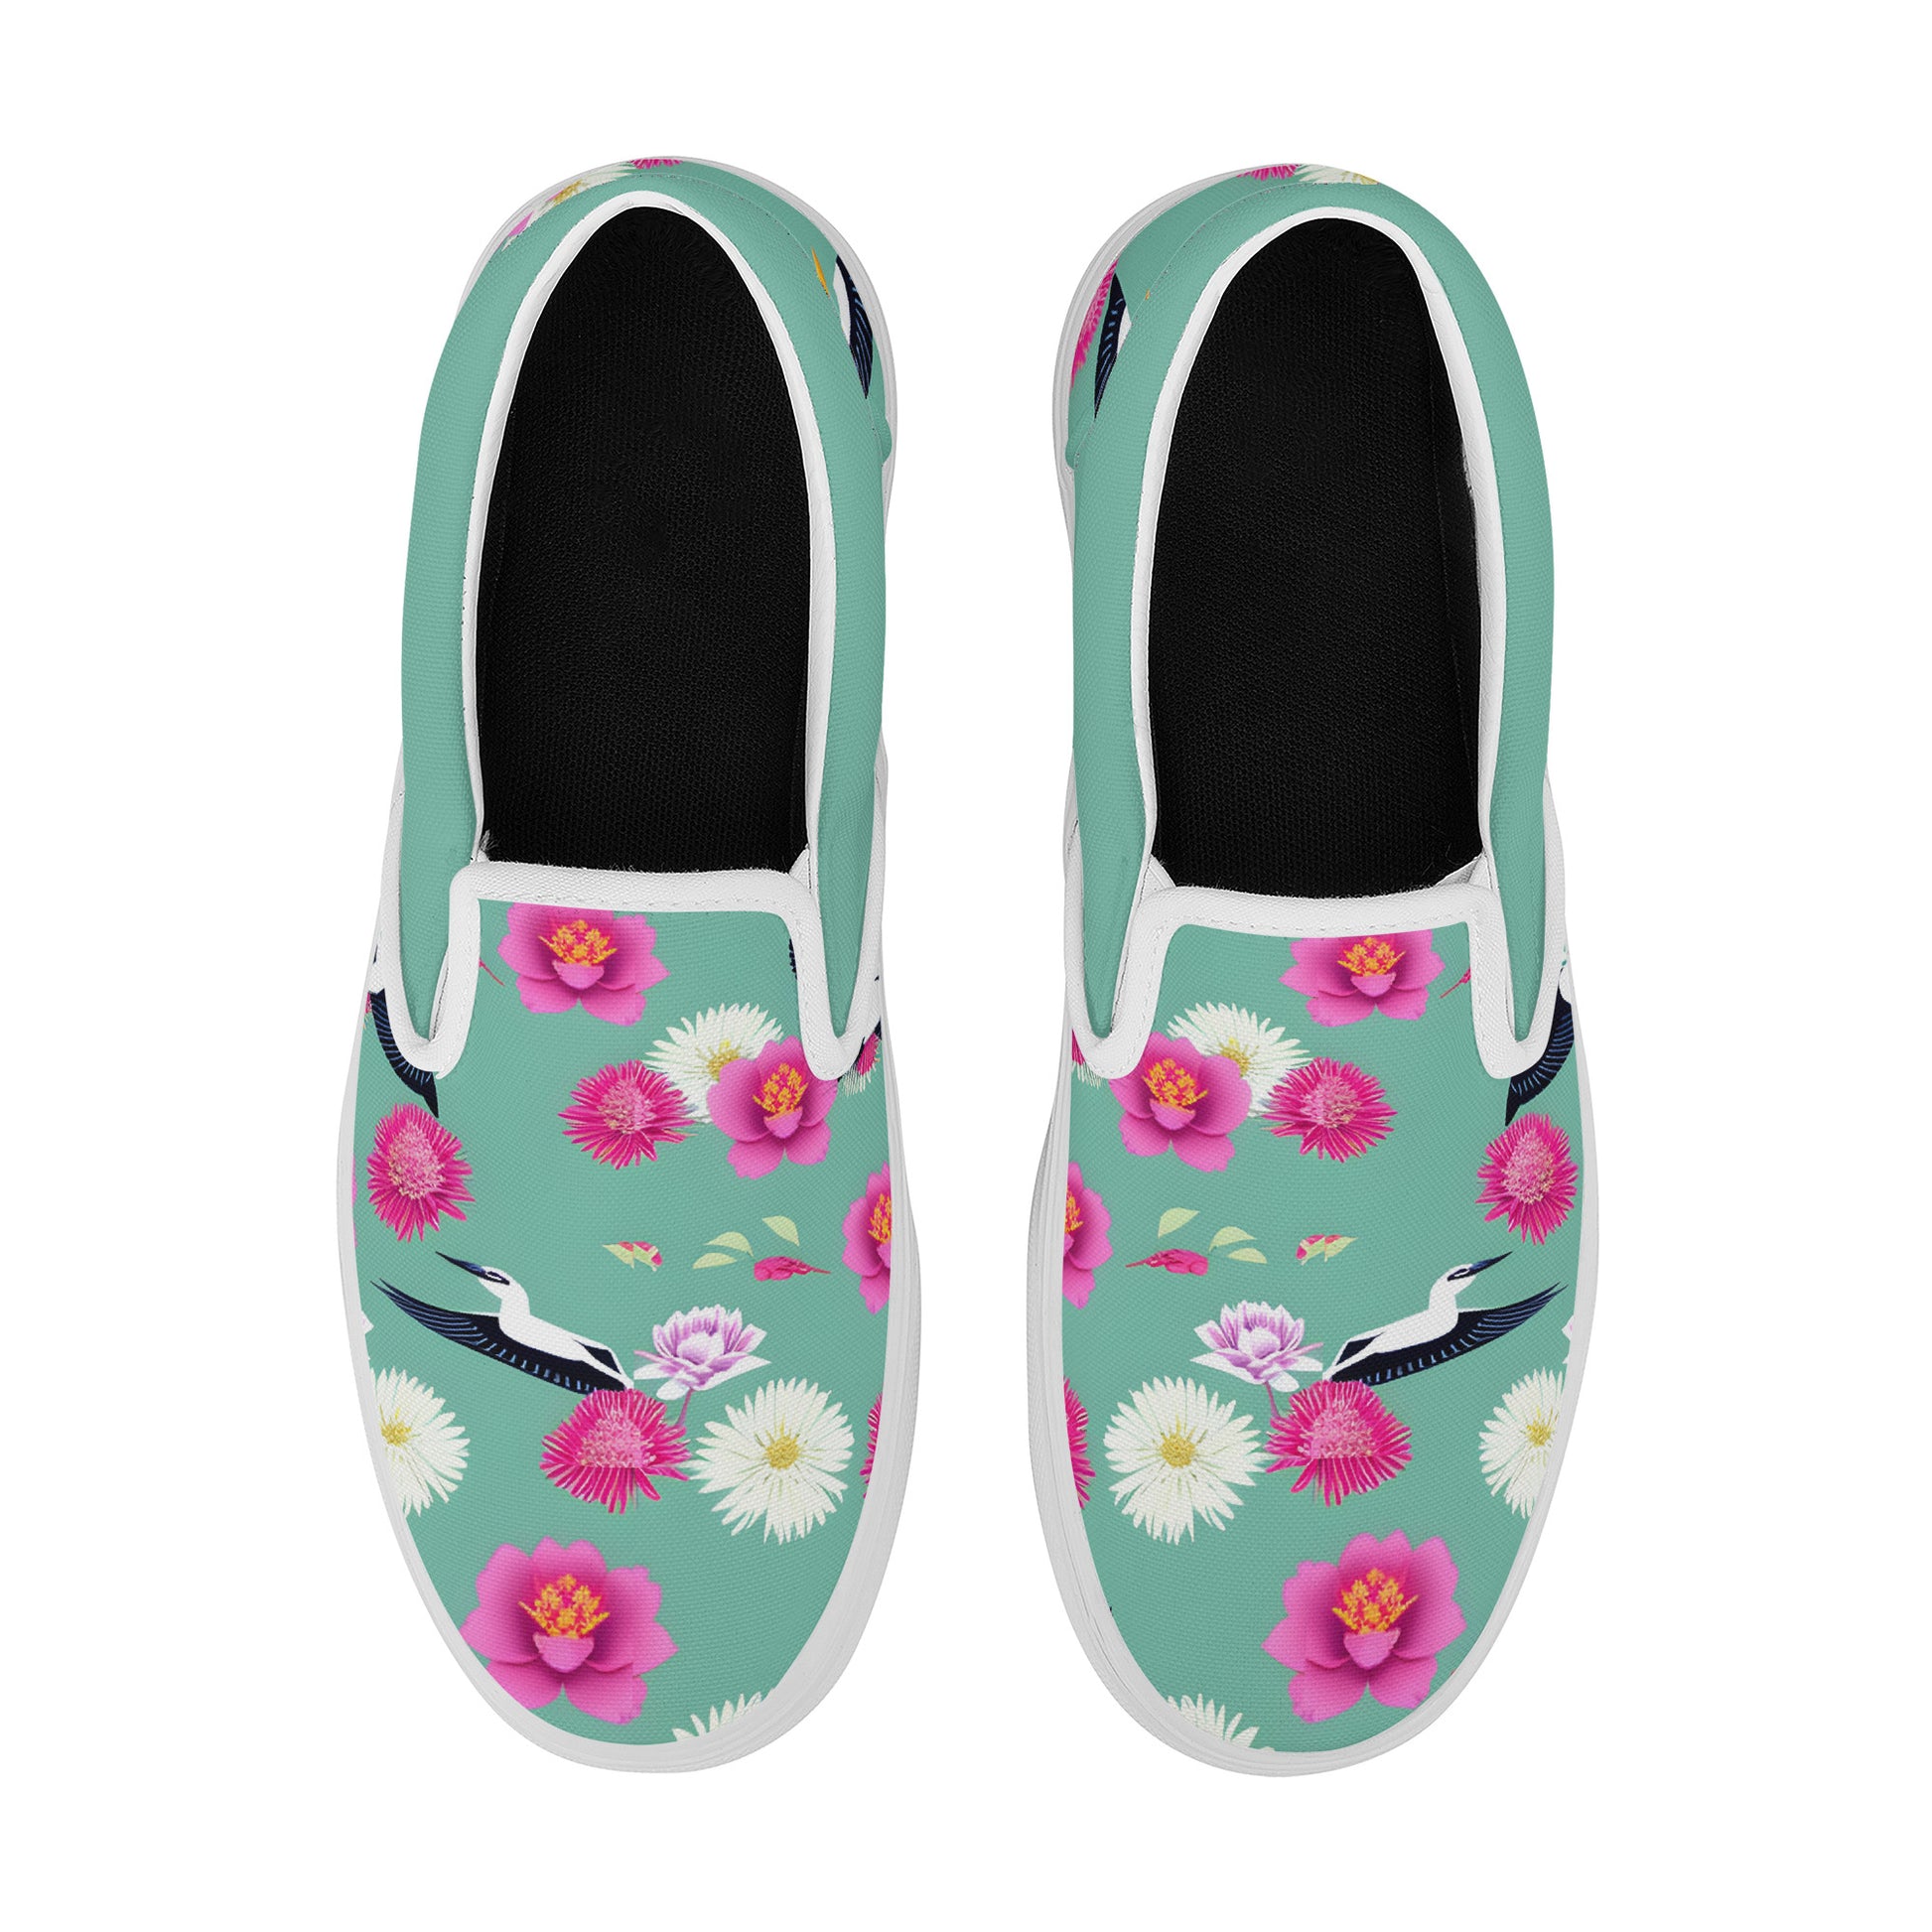 Happy Floral Skate Slip On Shoes